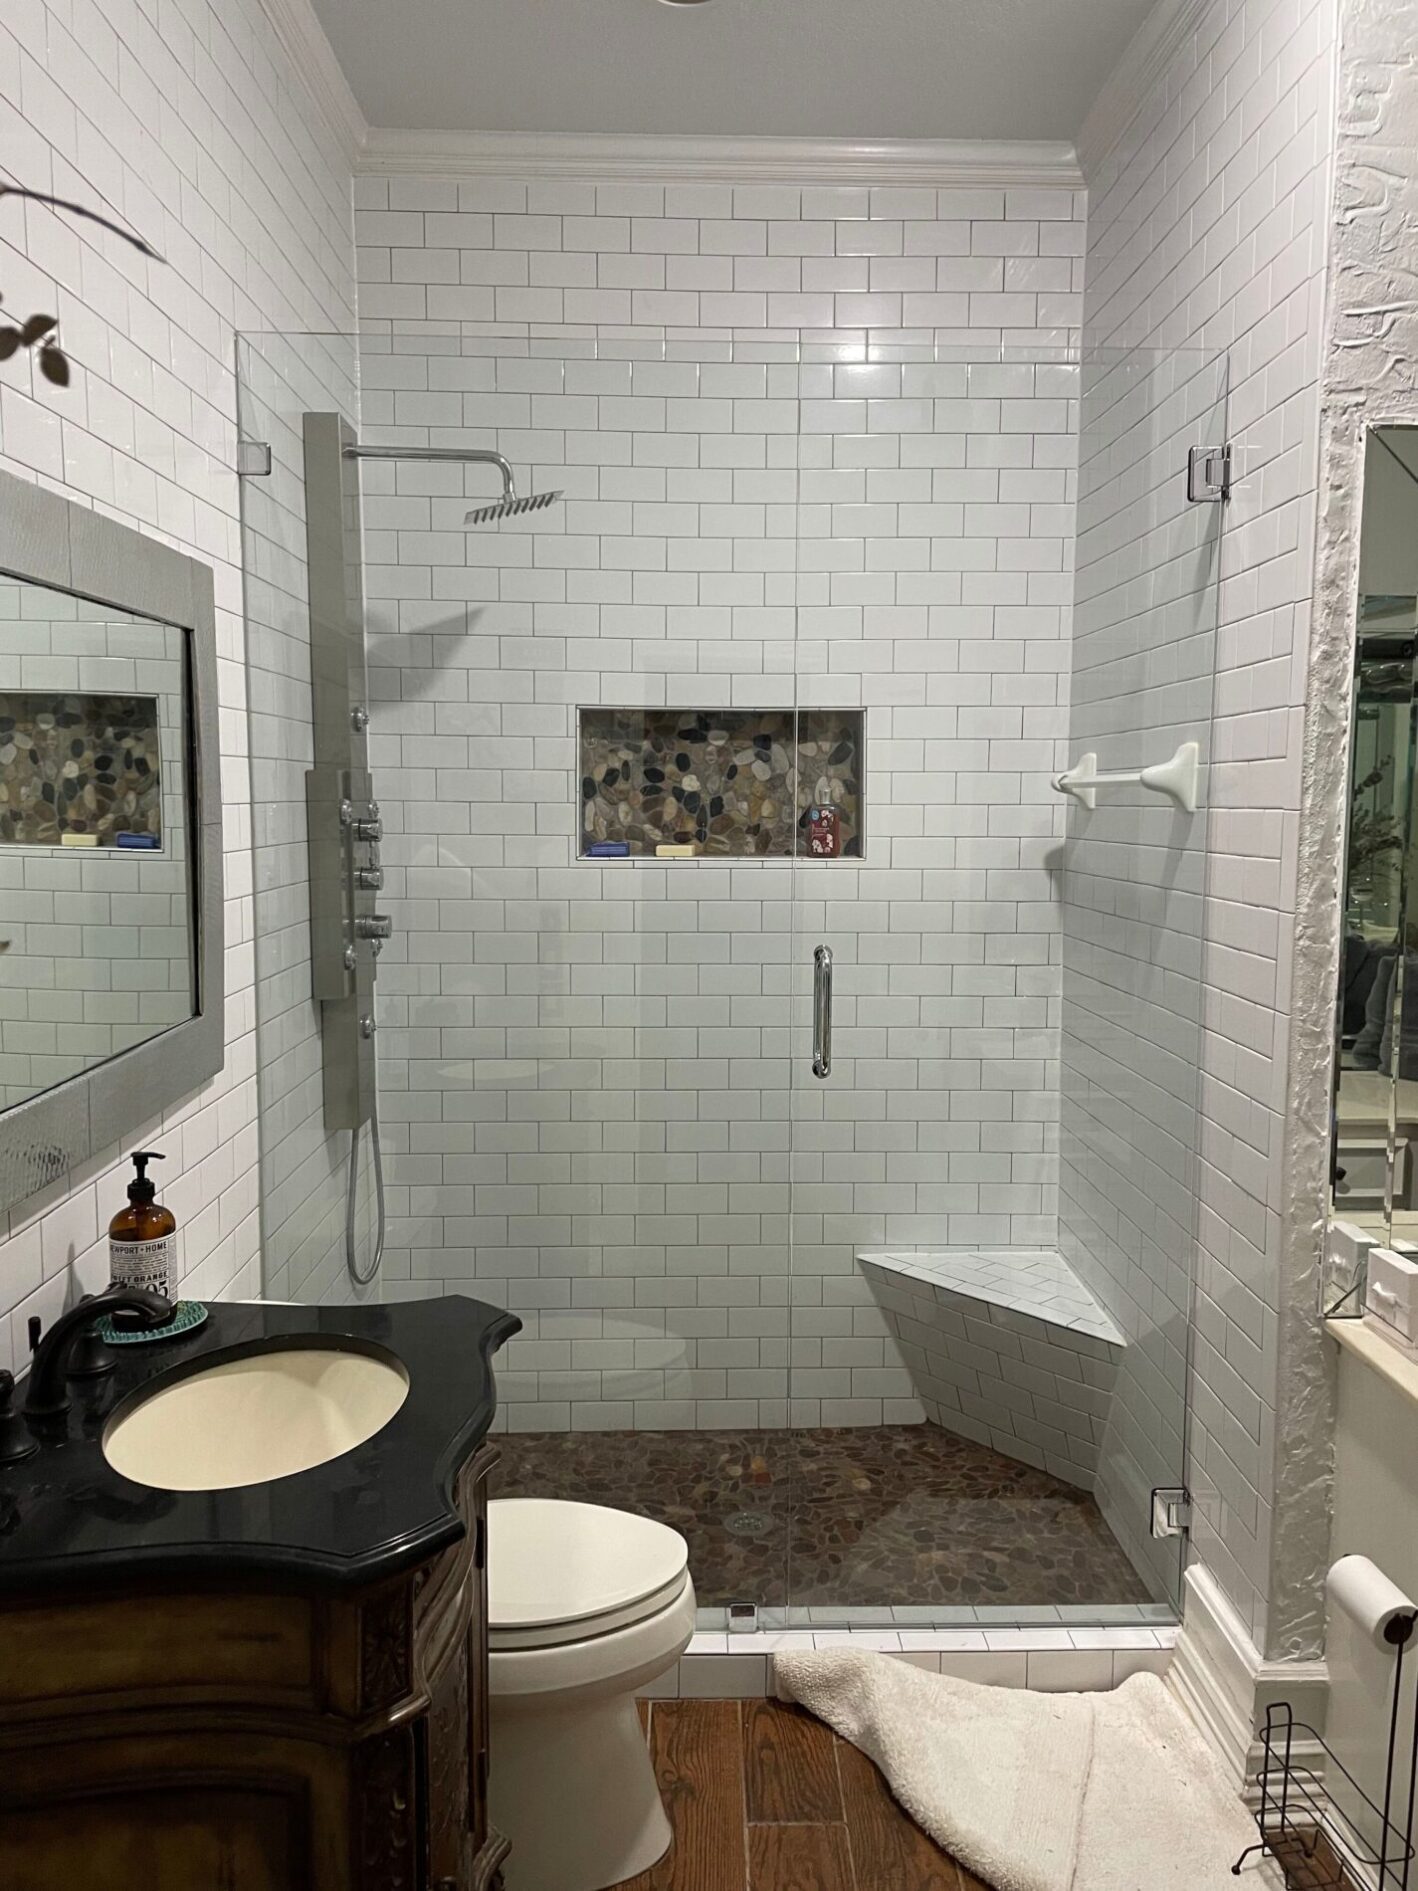 No.1 Best Home Bathroom Remodeling Texas - AMD Remodeling